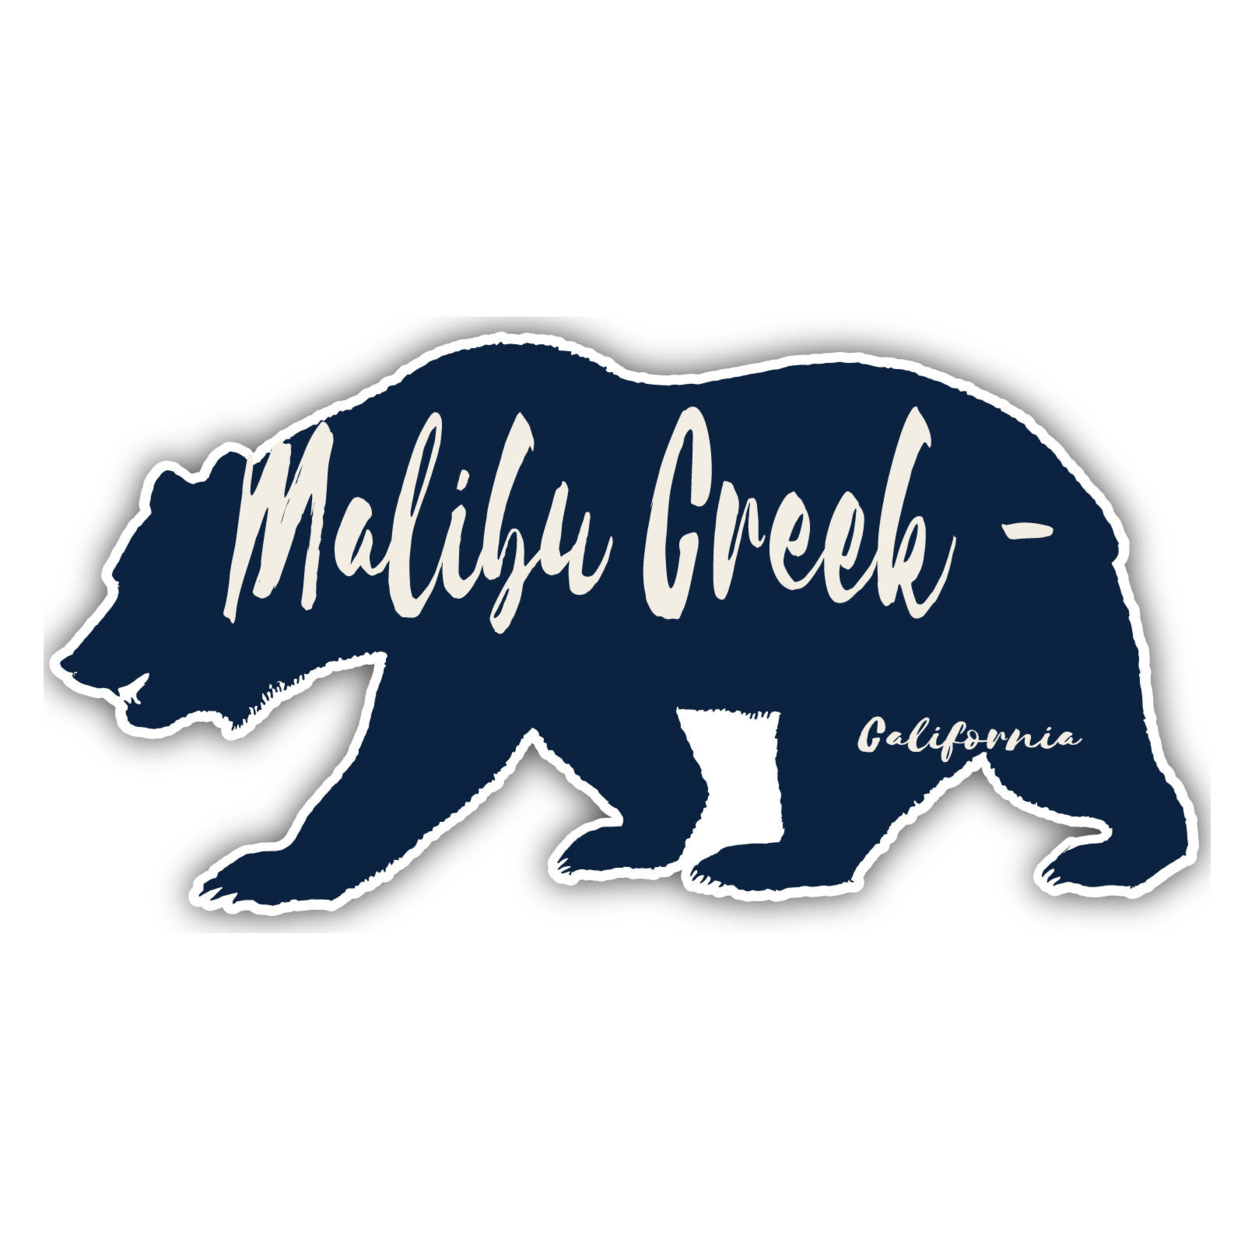 Malibu Creek - California Souvenir Decorative Stickers (Choose Theme And Size) - 2-Inch, Bear